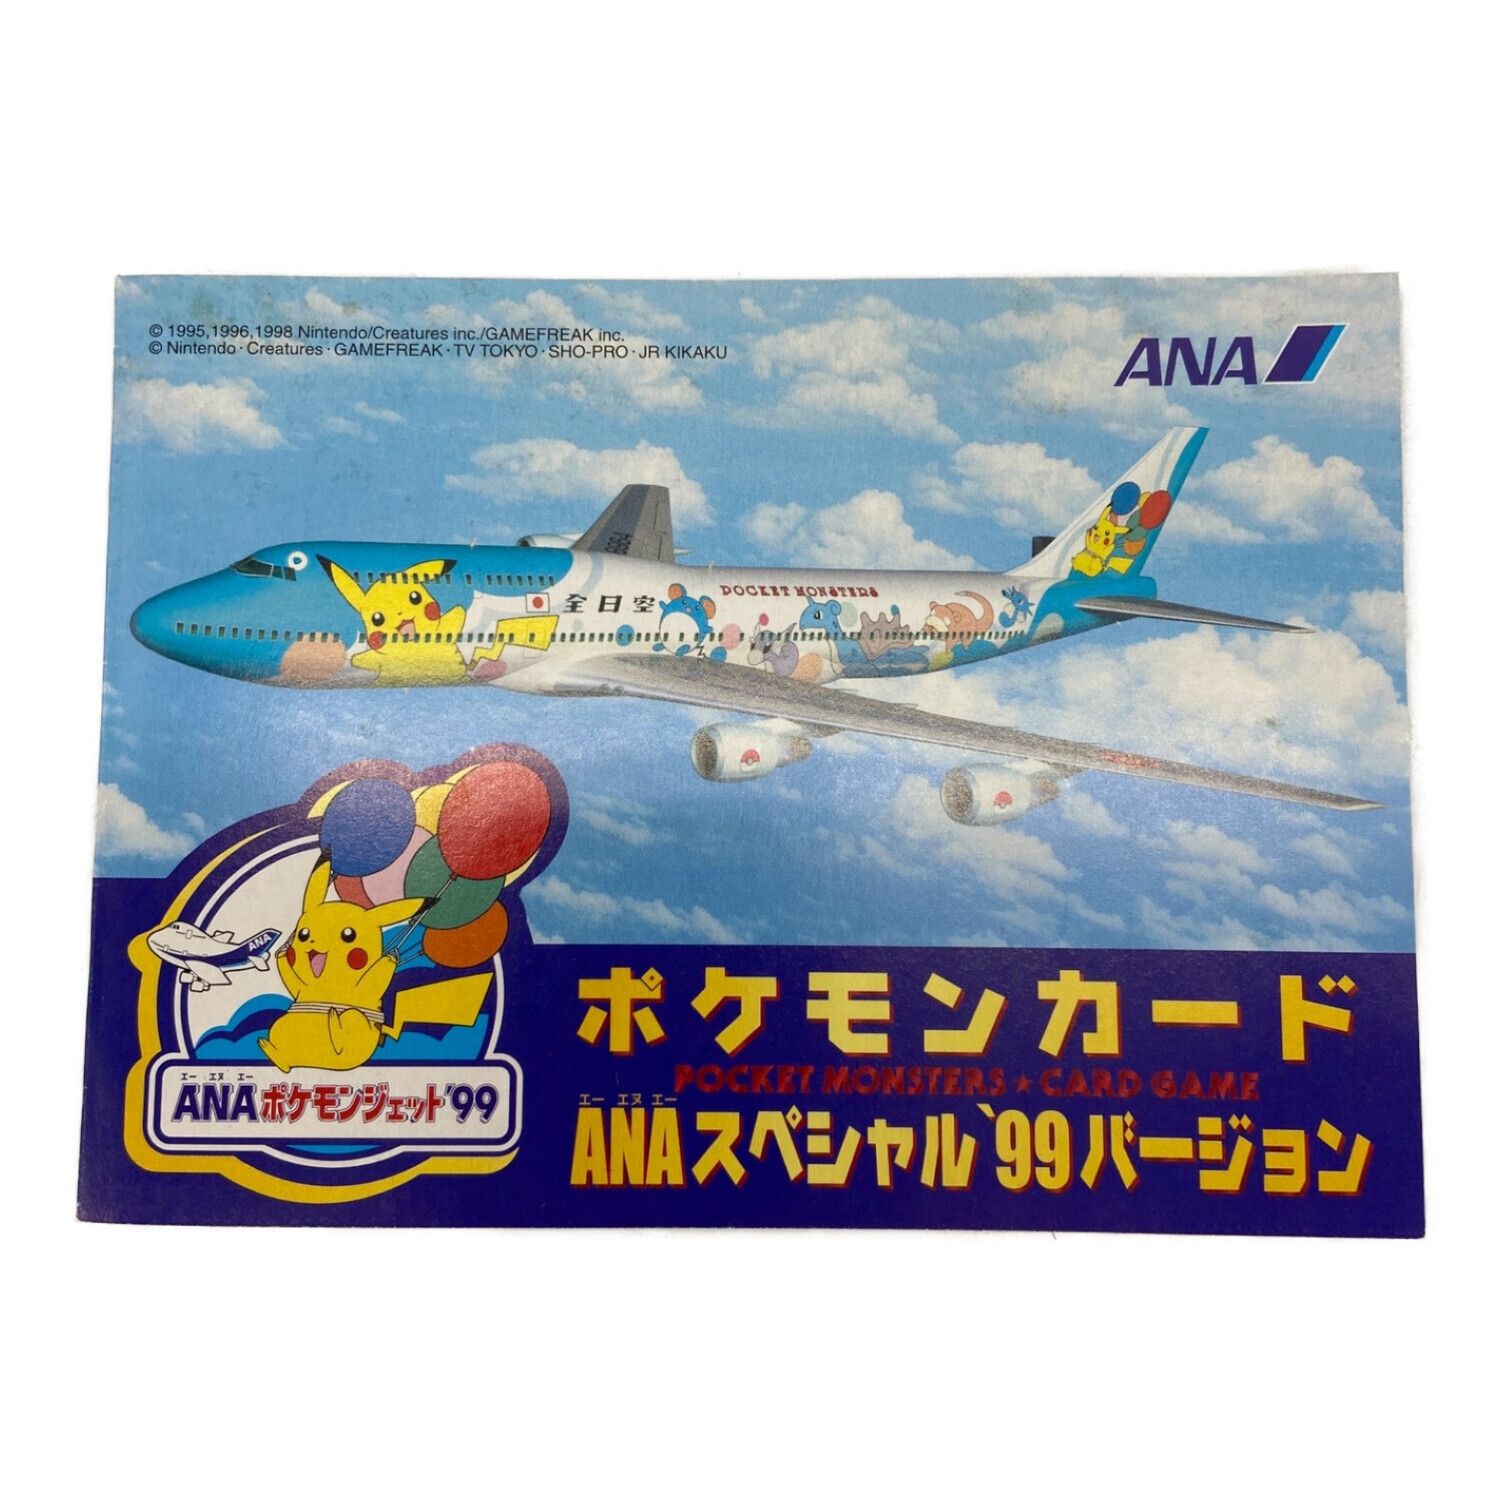 ANAポケモンカードポケモンカード ANAスペシャル'99バージョン